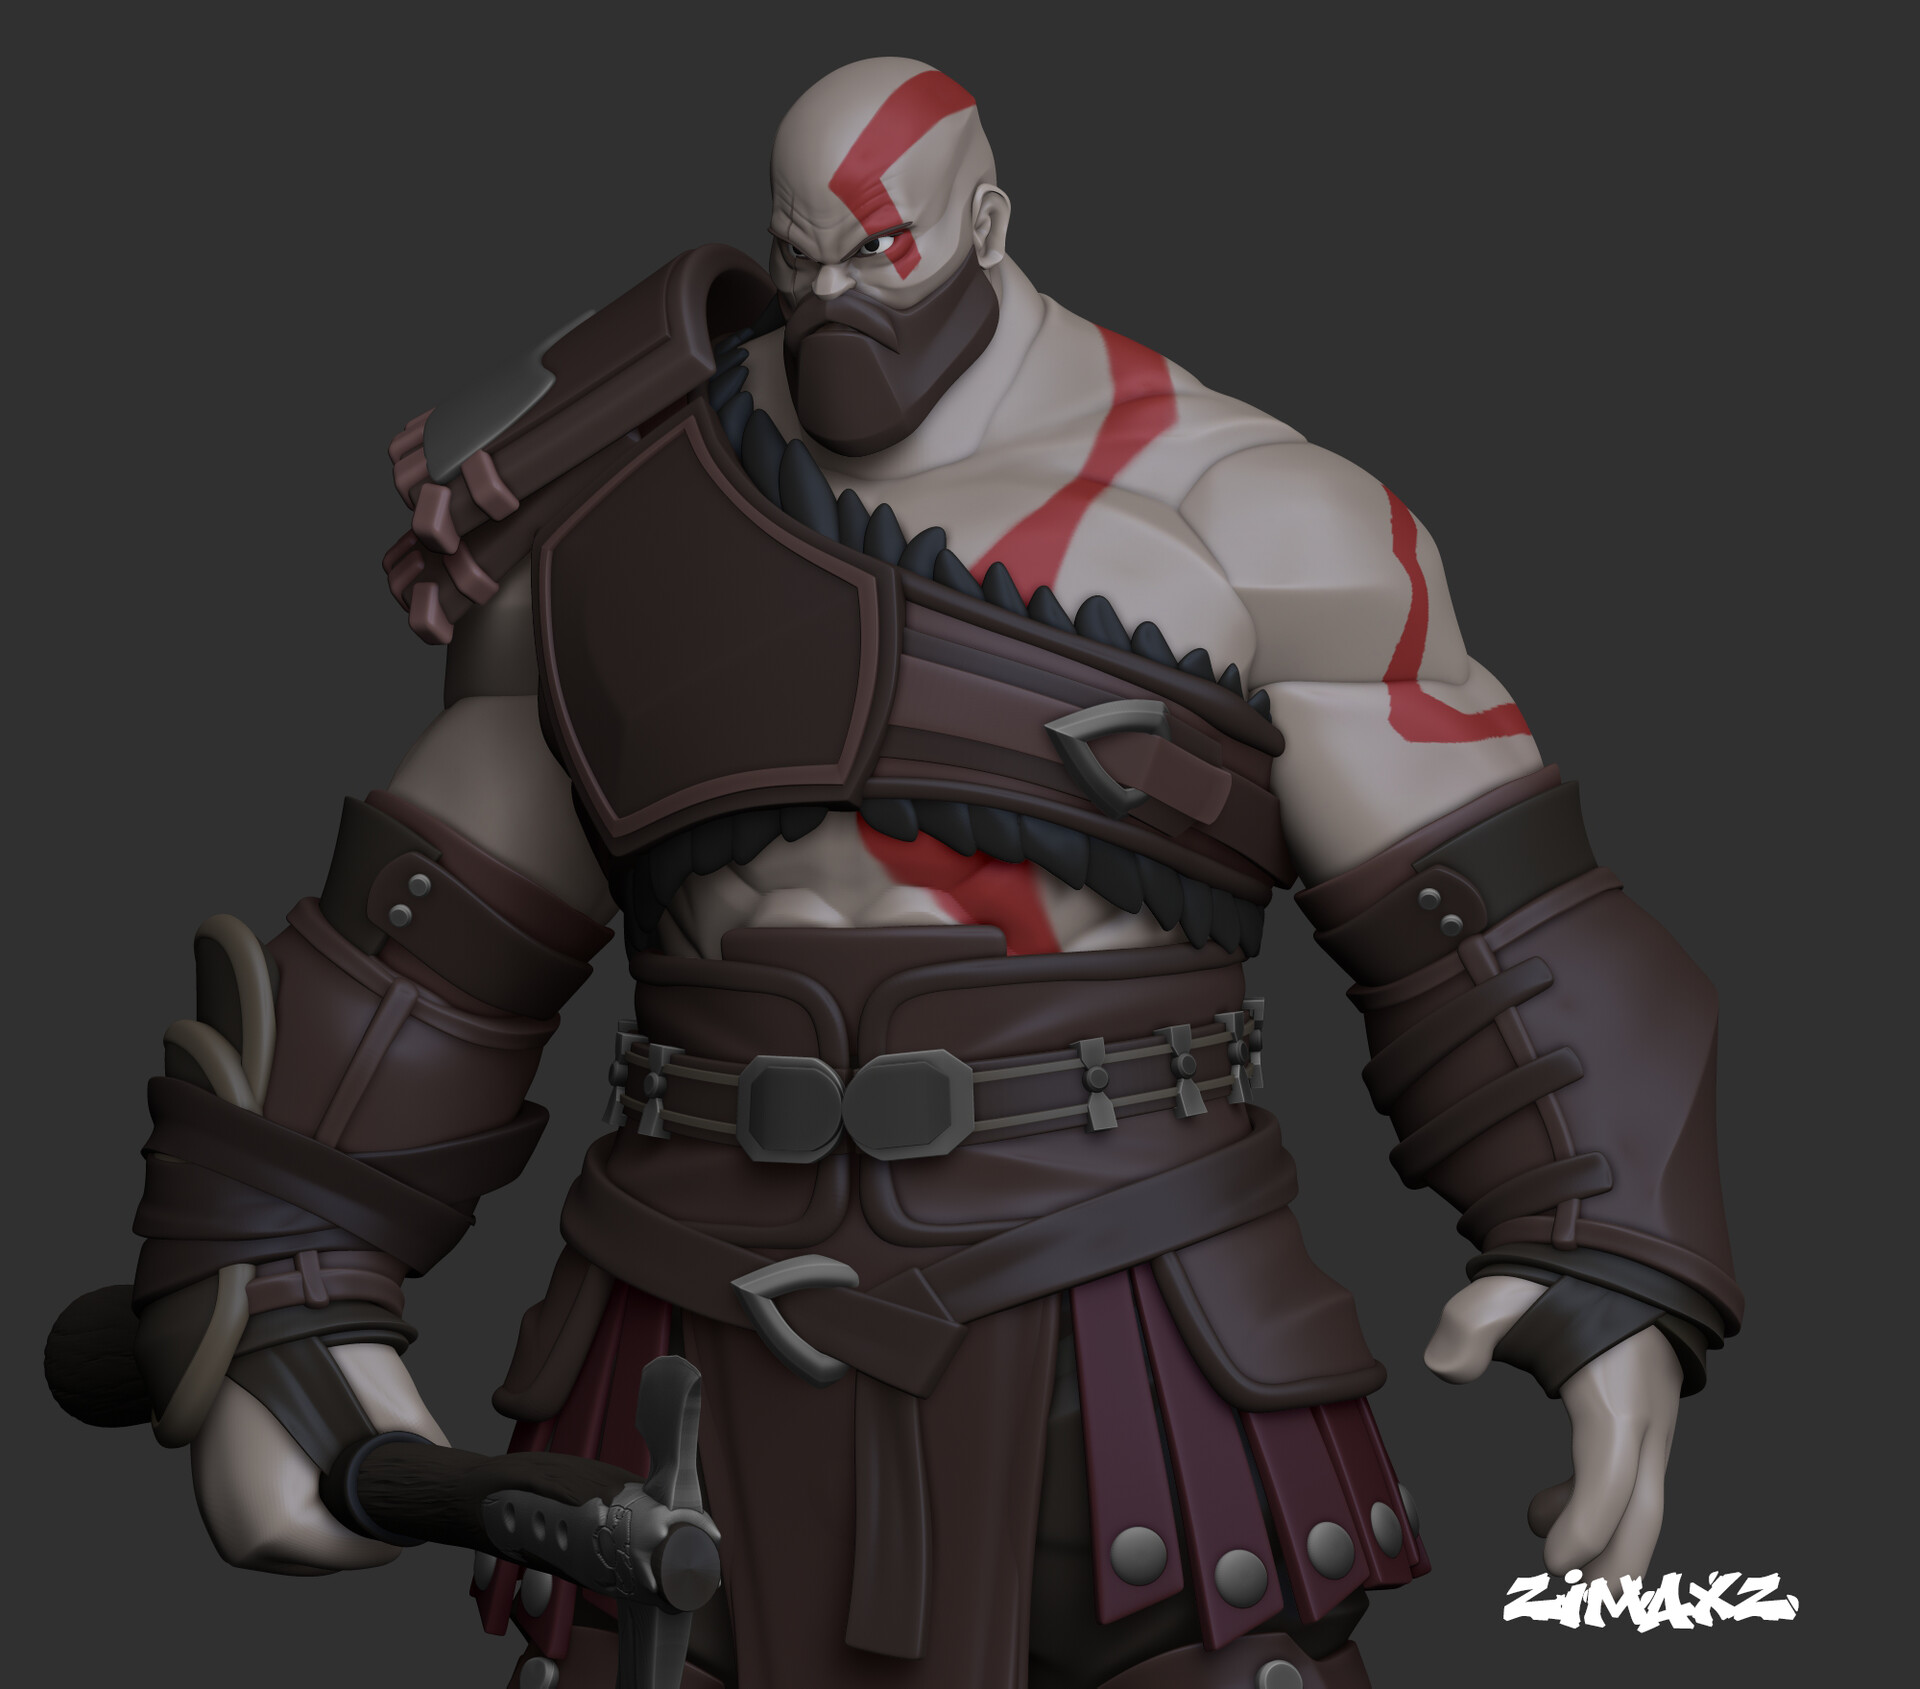 ArtStation - God of War II - Kratos